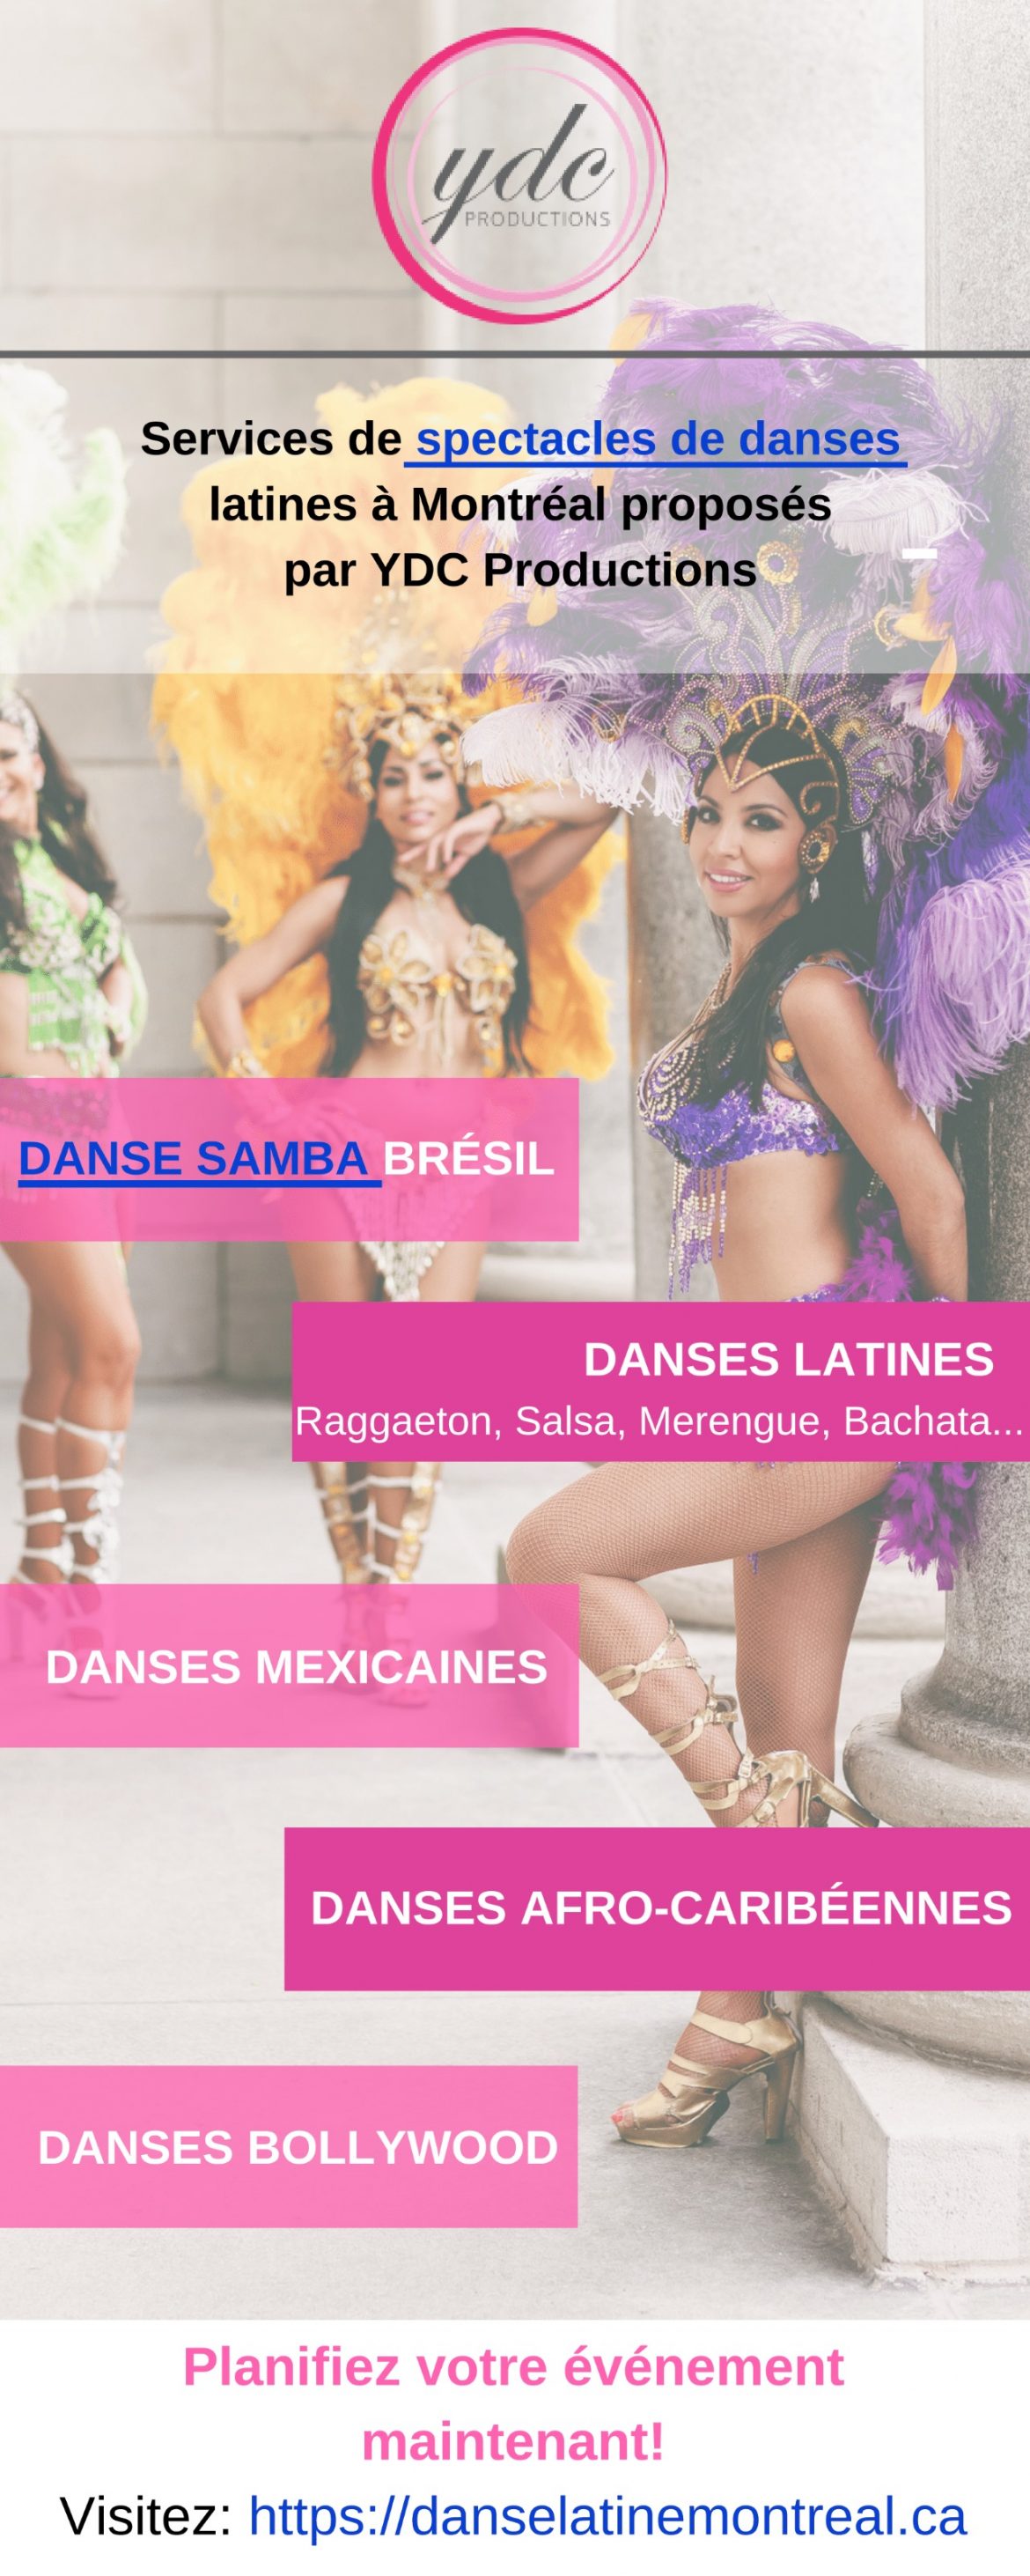 FR-Danse-Latine-Montreal-SEO-January-2019-1.jpg